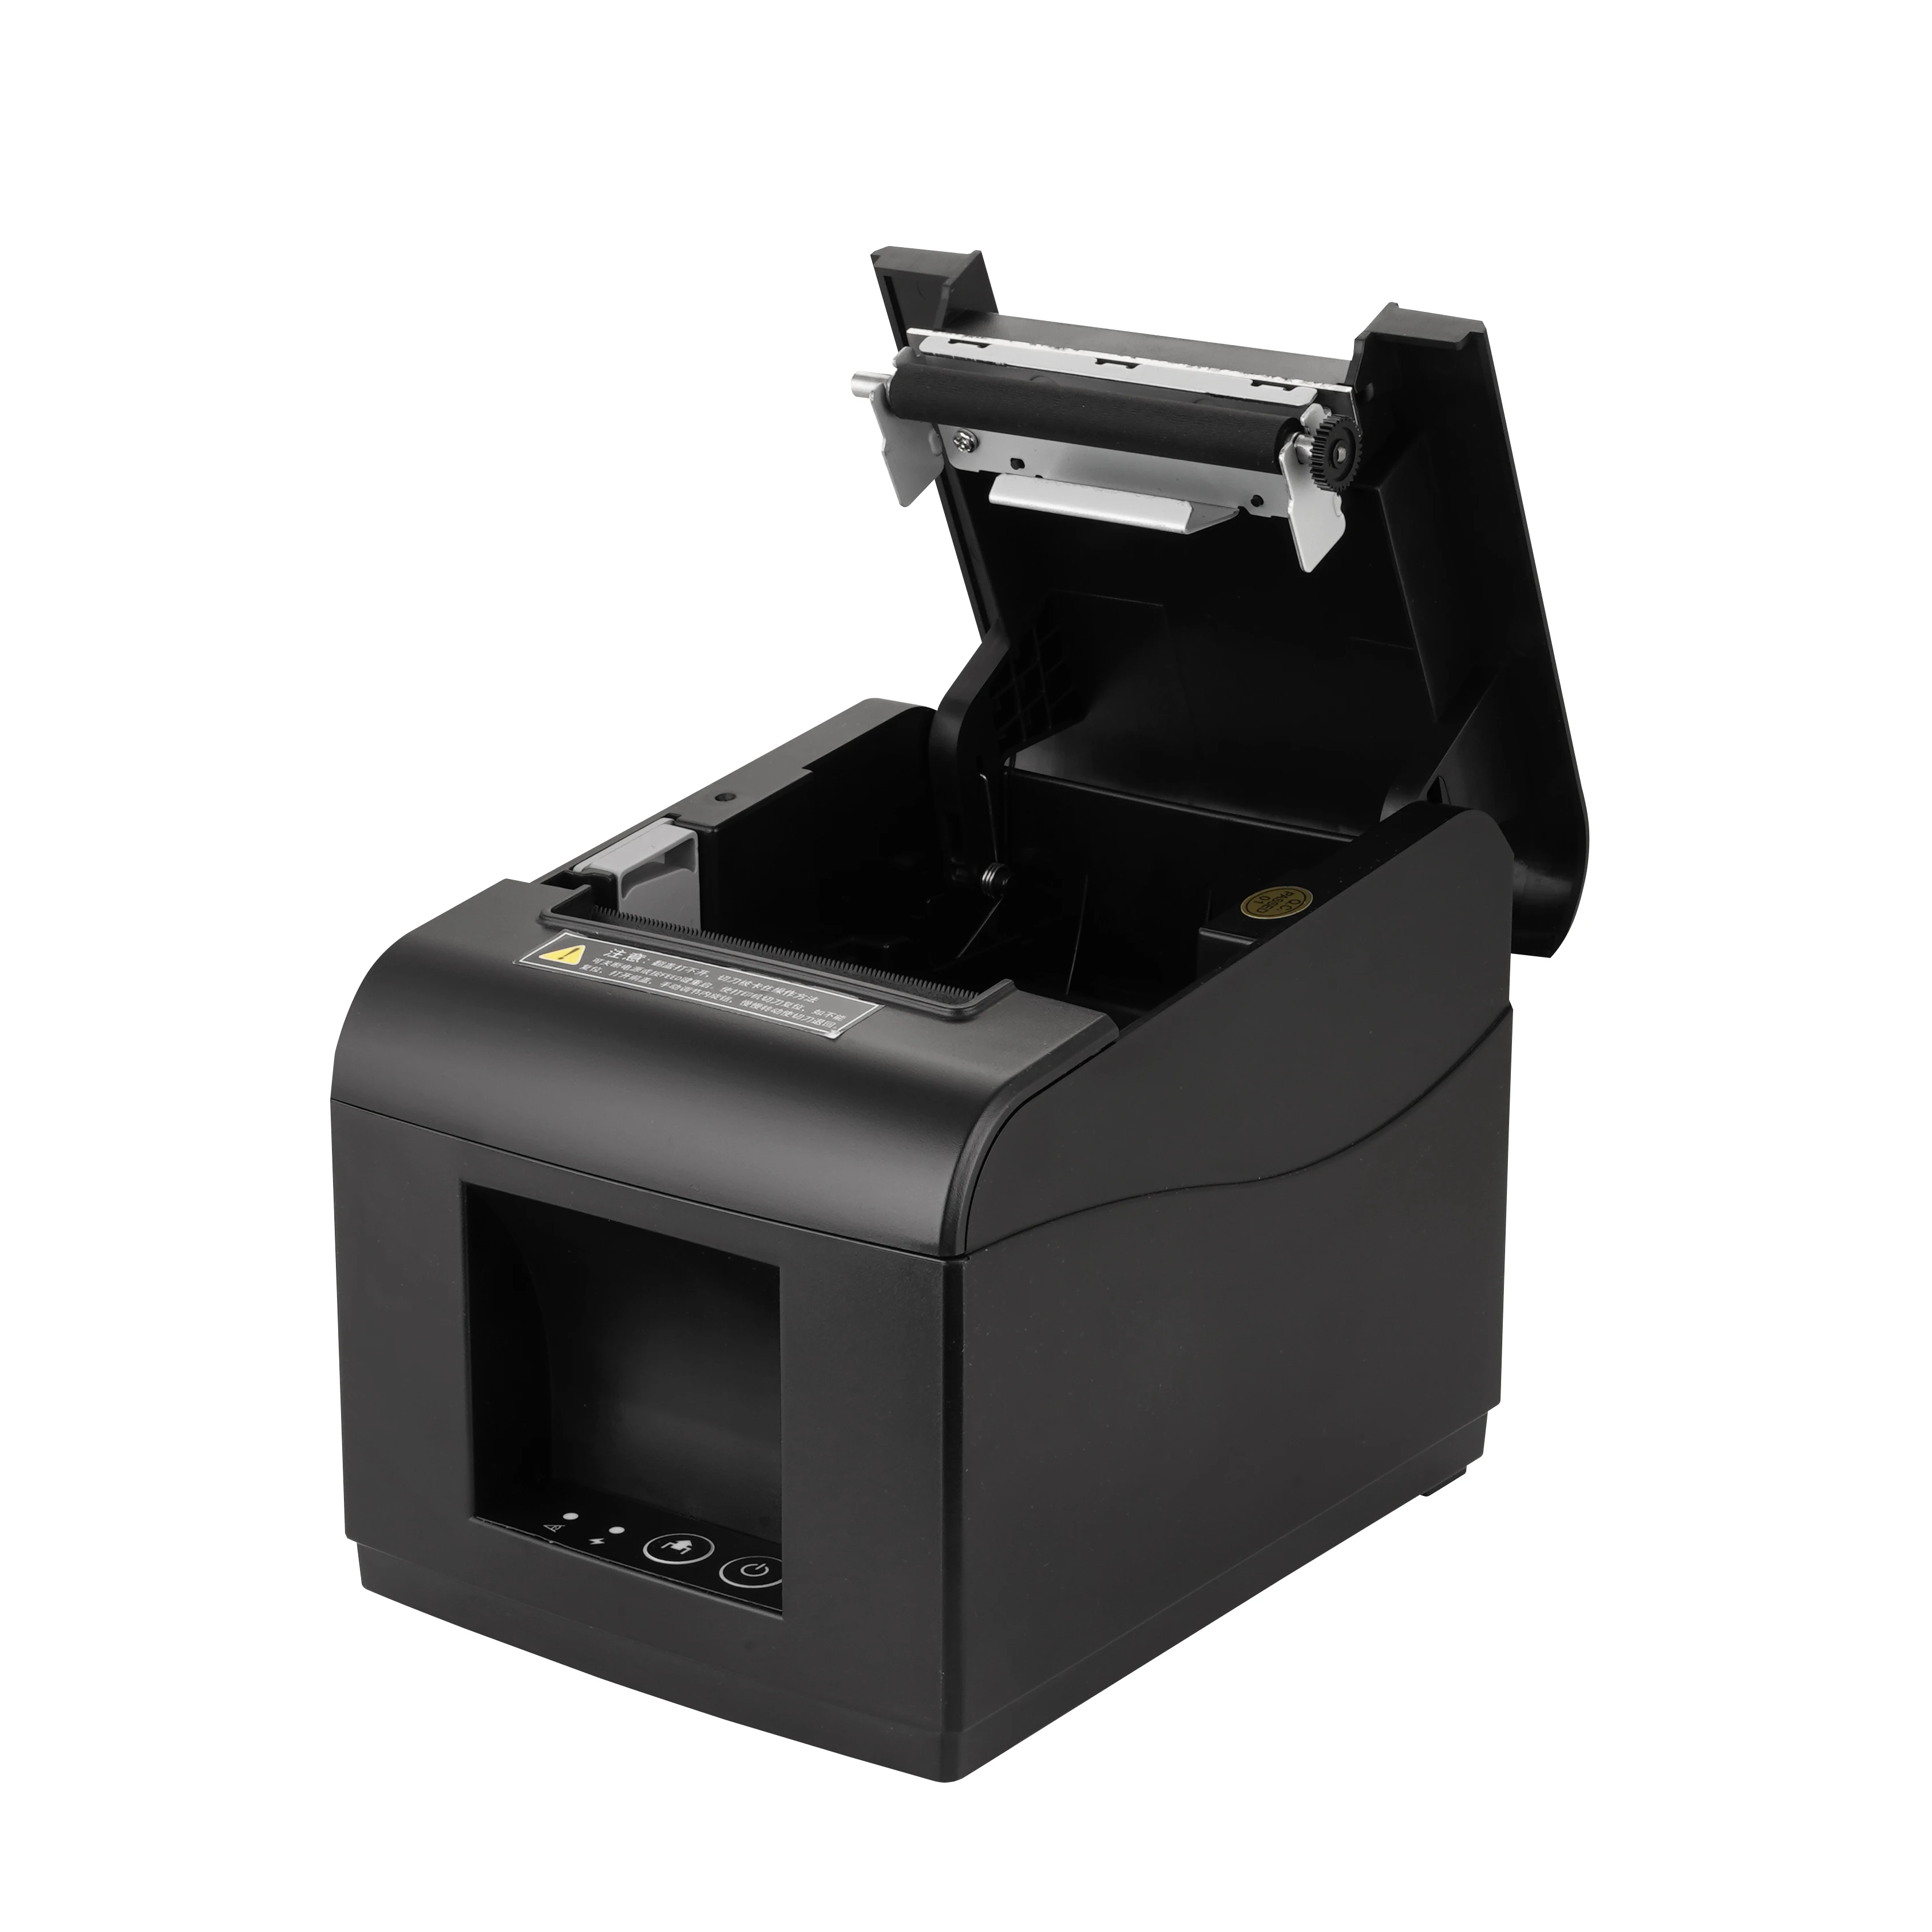 thermal printer inkless 3inch 80mm receipt printer imprimante trmica desktop POS printer